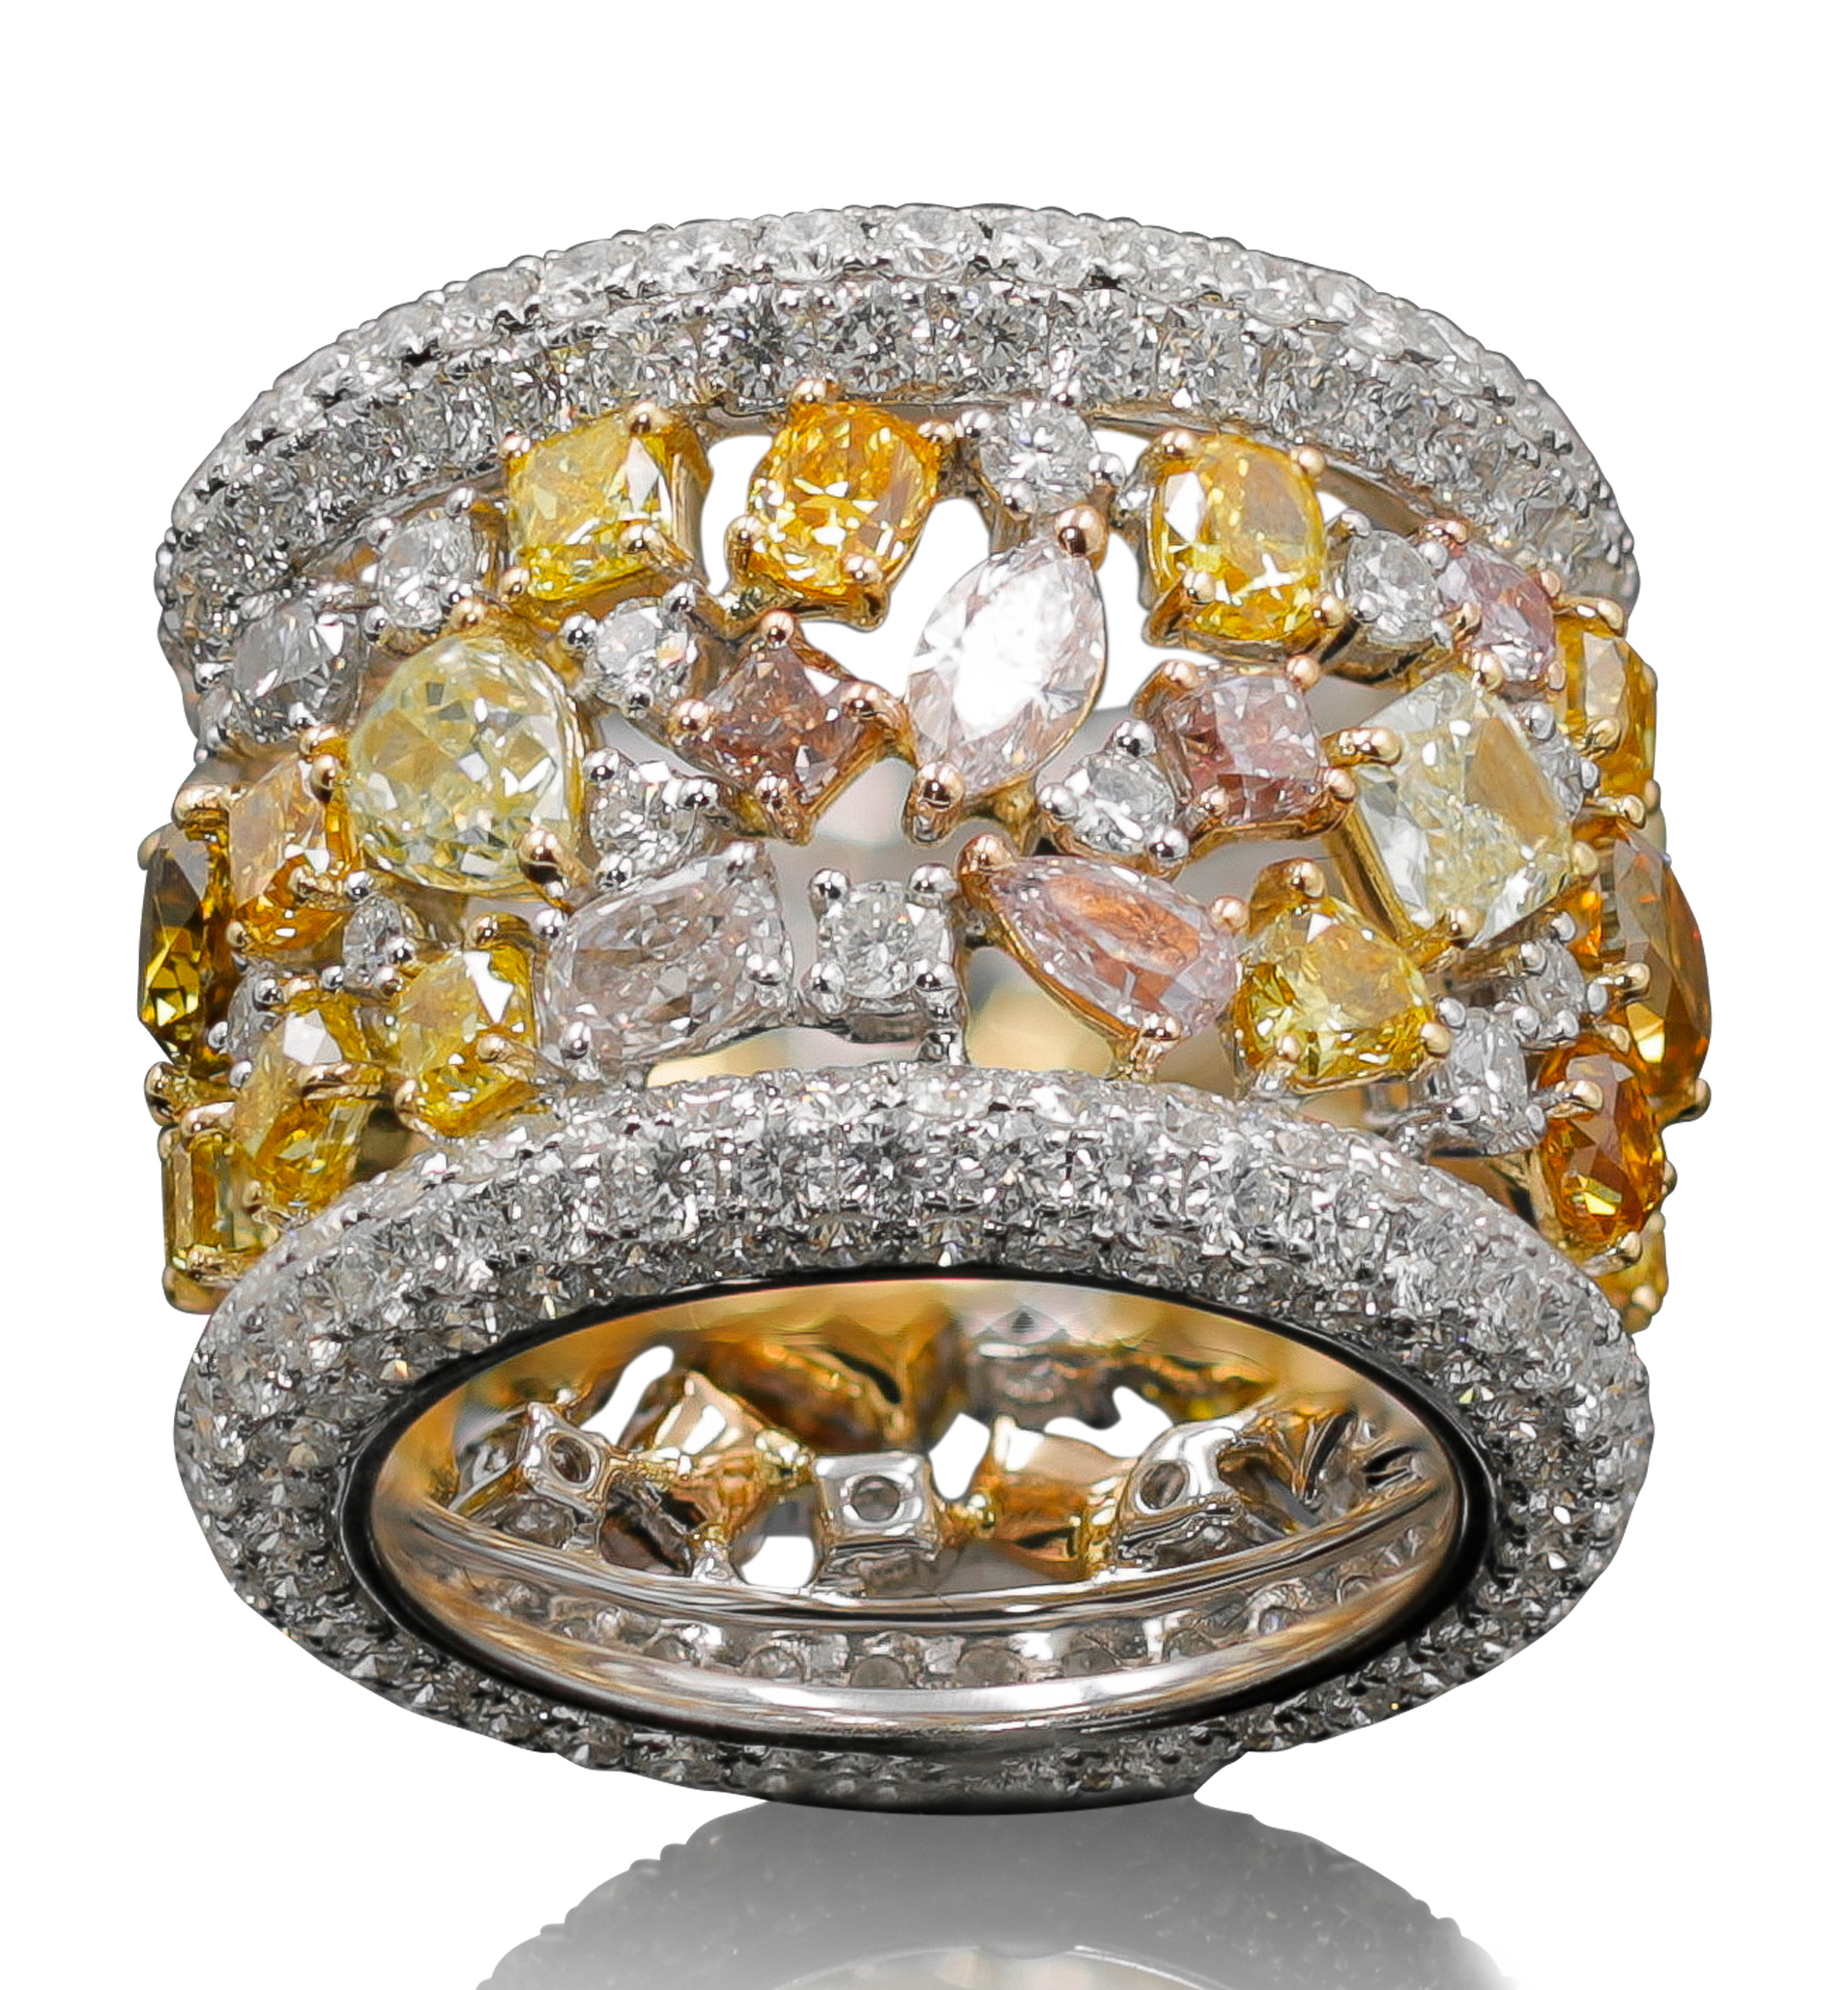 Tal's Designs diamond ring 